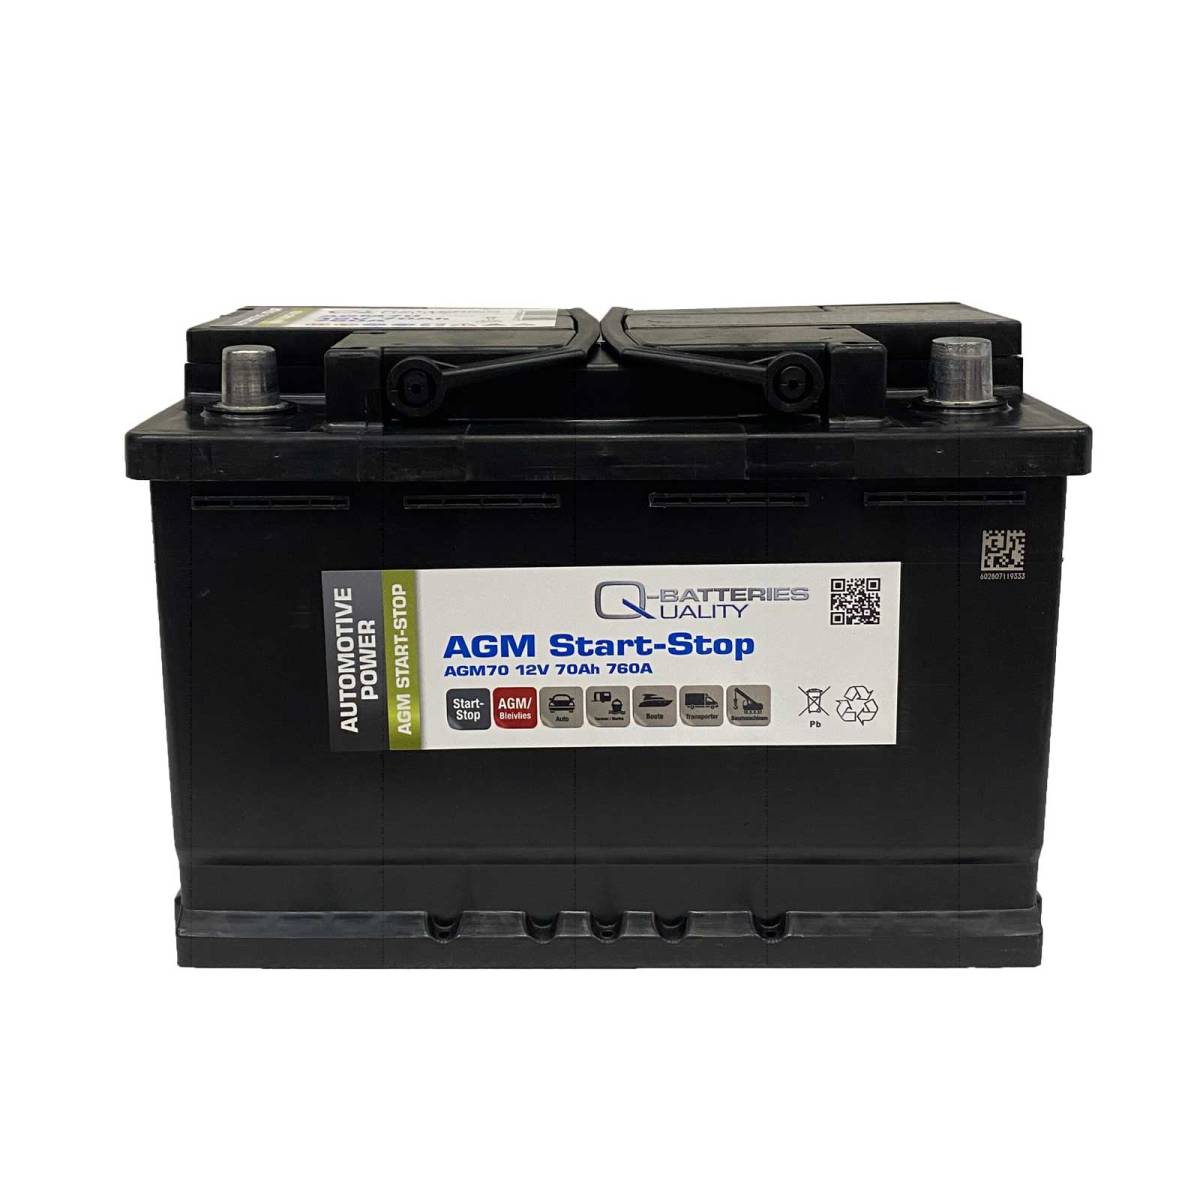 Q-Batteries Start-Stop car battery AGM70 12V 70 Ah 760A, Starter batteries, Boots & Marine, Batteries by application